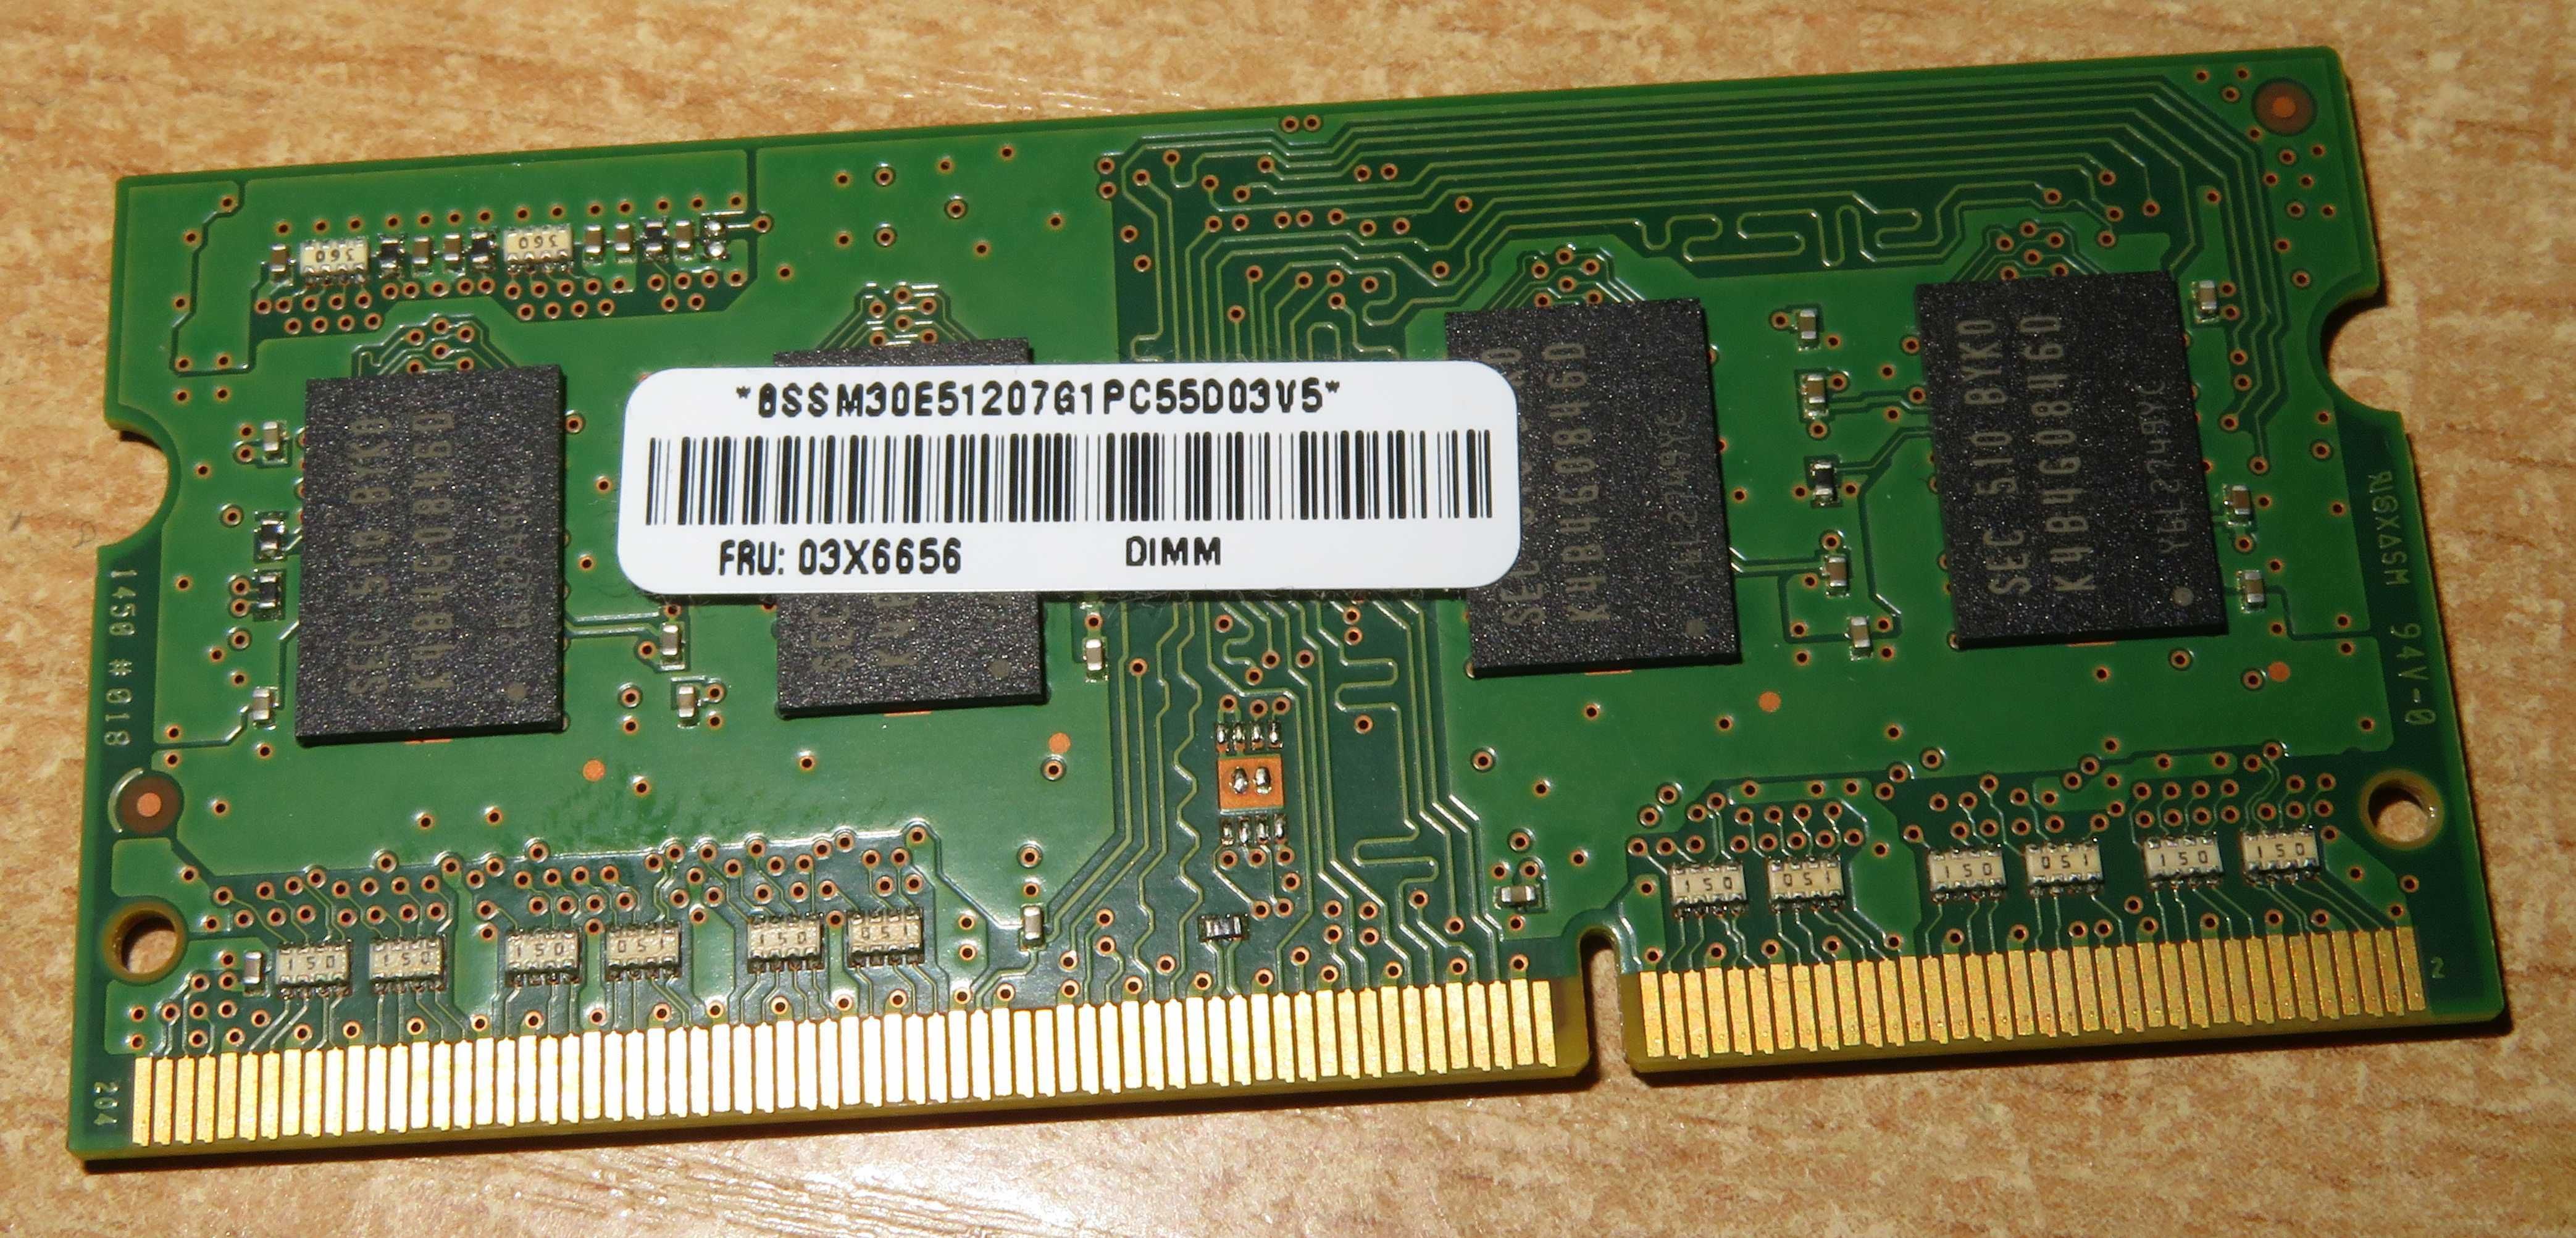 pamieć   DDR 3  1280    4 gb  samsung